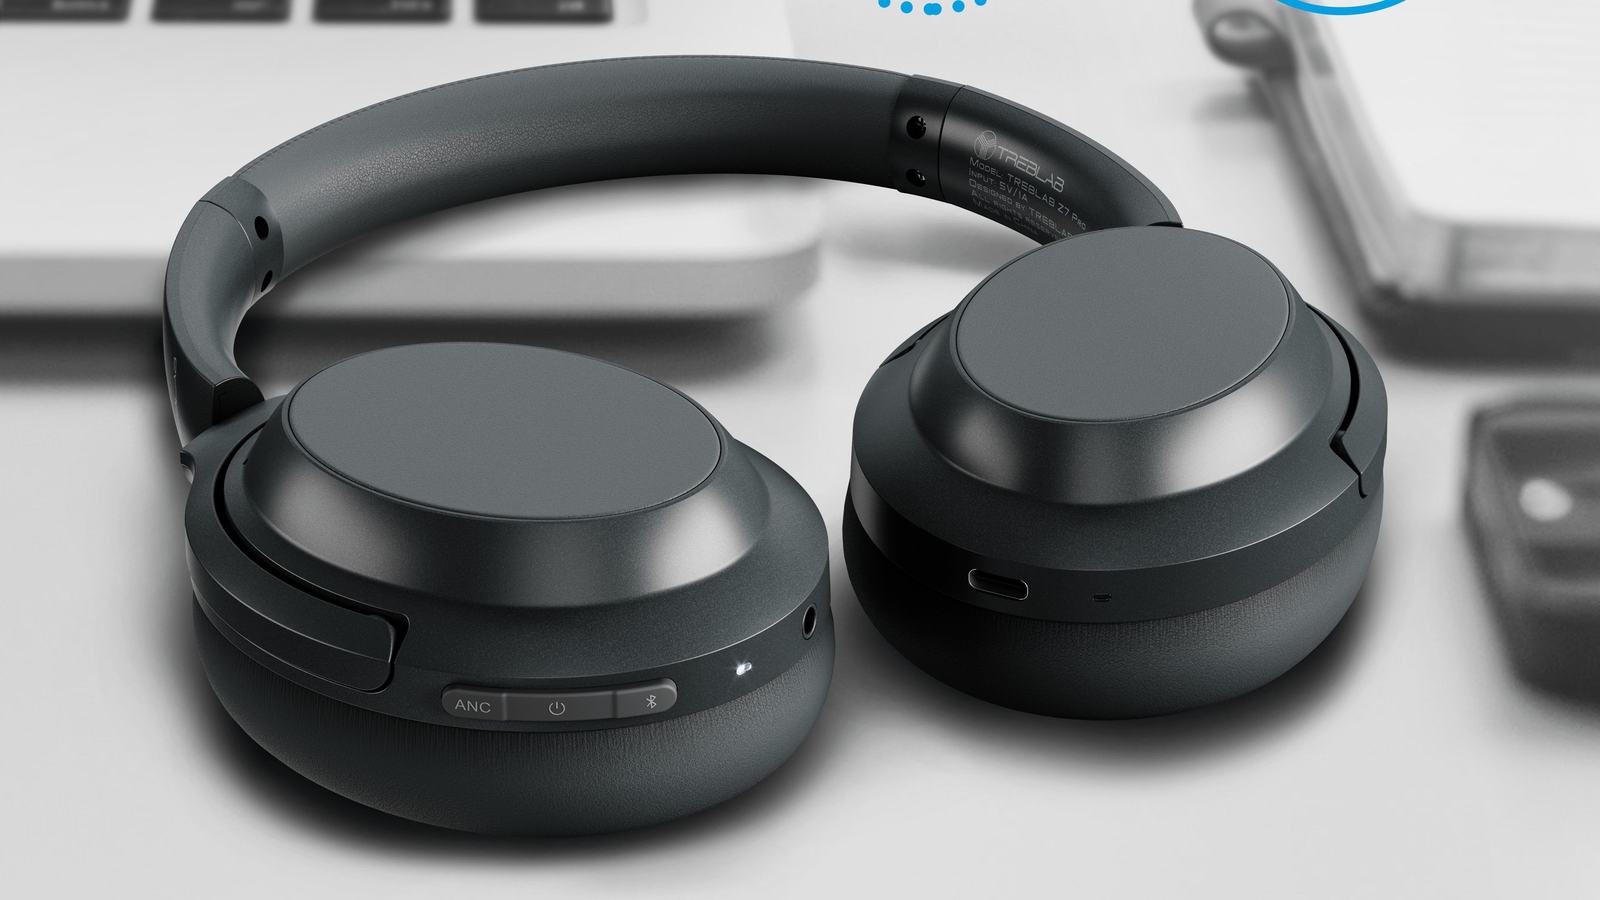 TREBLAB Z7 PRO - Hybrid Active Noise Canceling Headphones